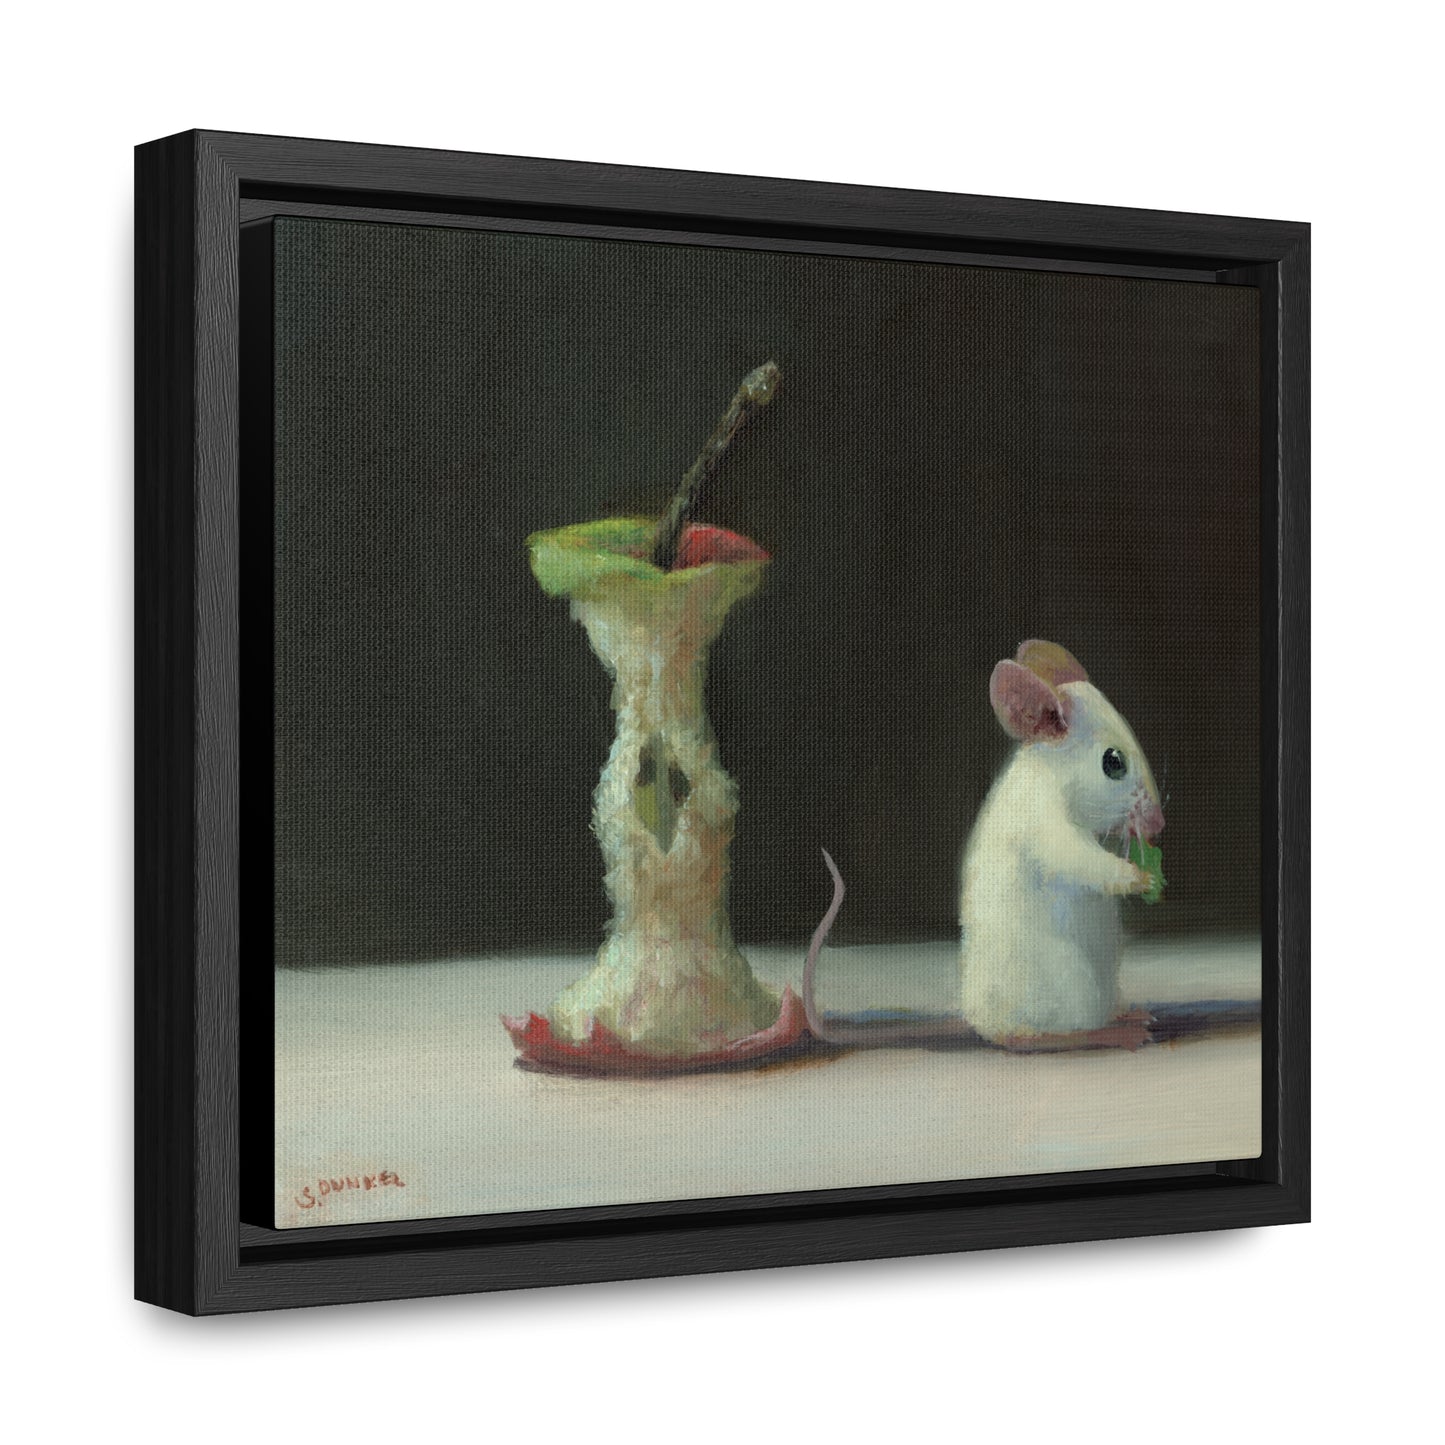 Stuart Dunkel: "Salvage" - Framed Canvas Reproduction